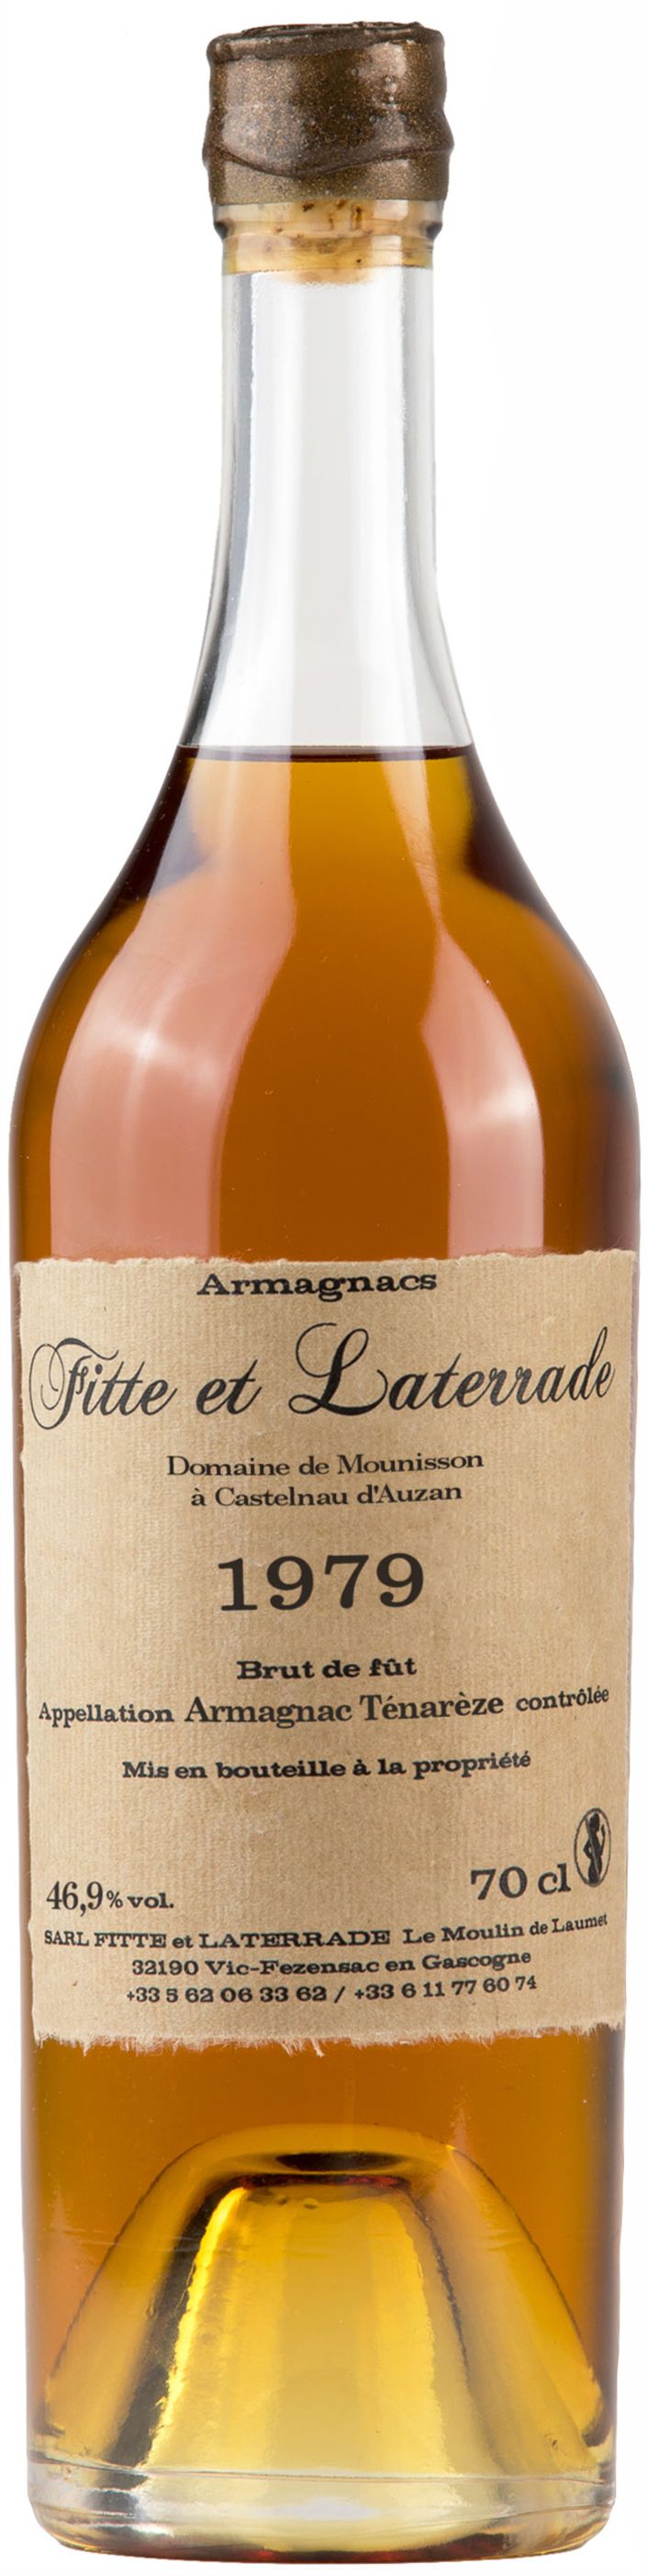 Fitte Et Laterrade, Domaine De Mounisson A Castelnau d'Auzan Armagnac Tenareze, 1979